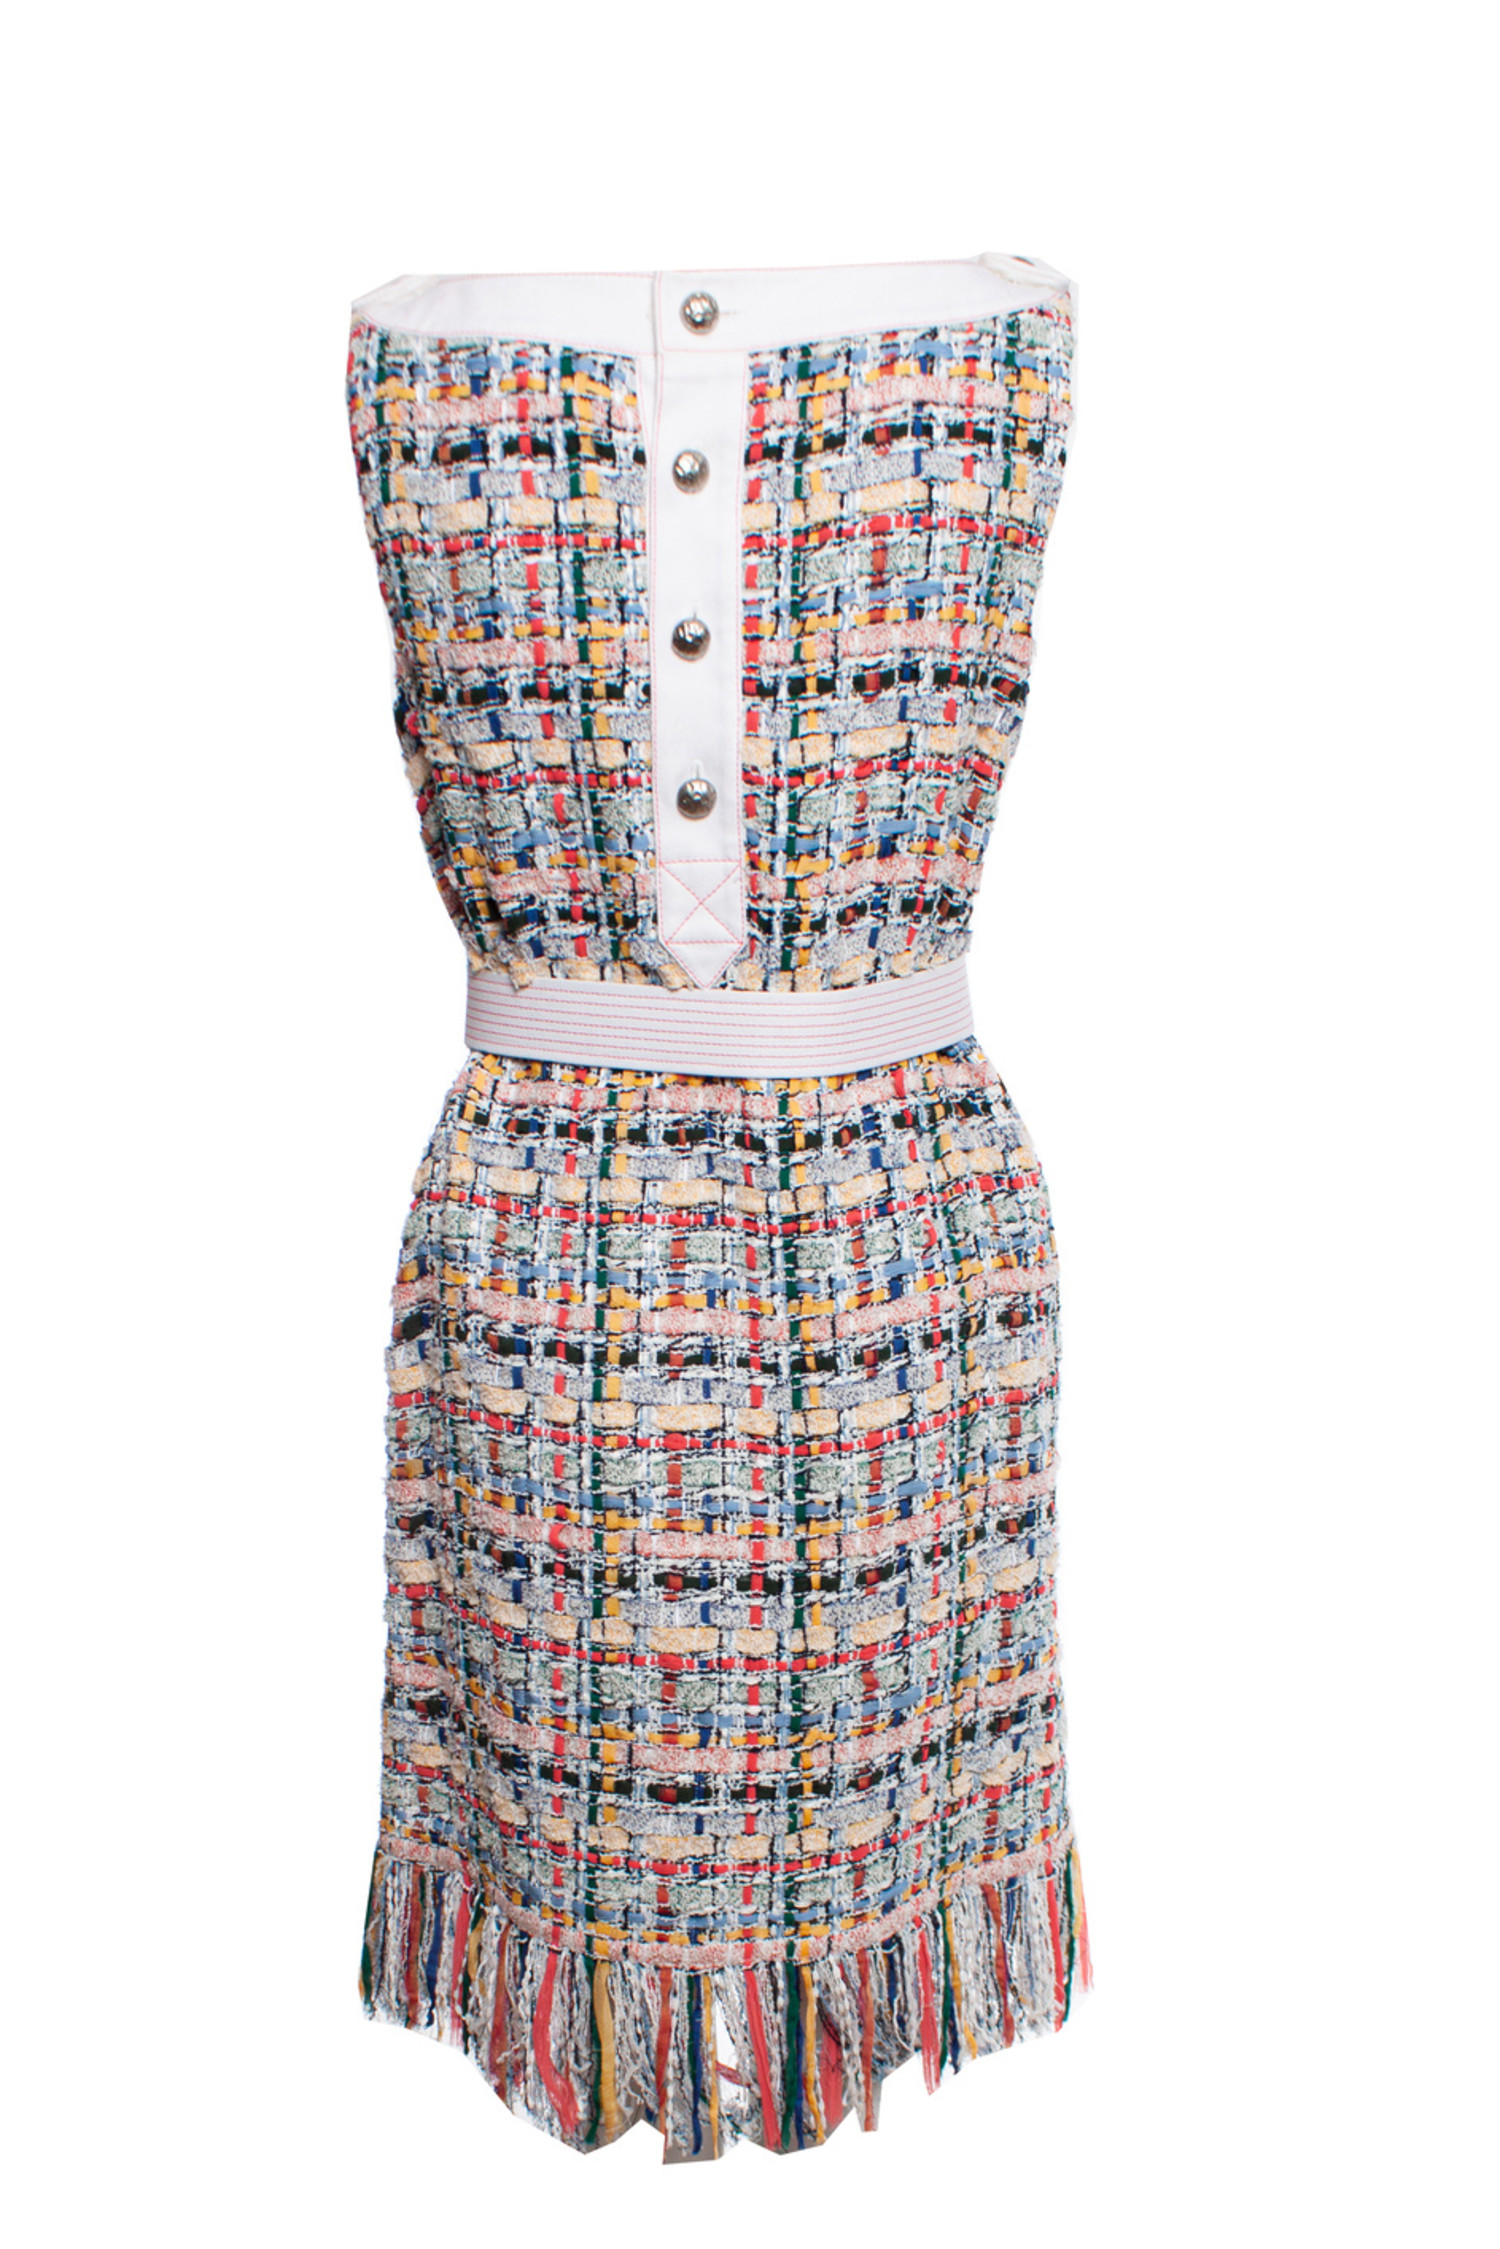 Shop Chanel Inspired Tweed Dress, Look a like chanel